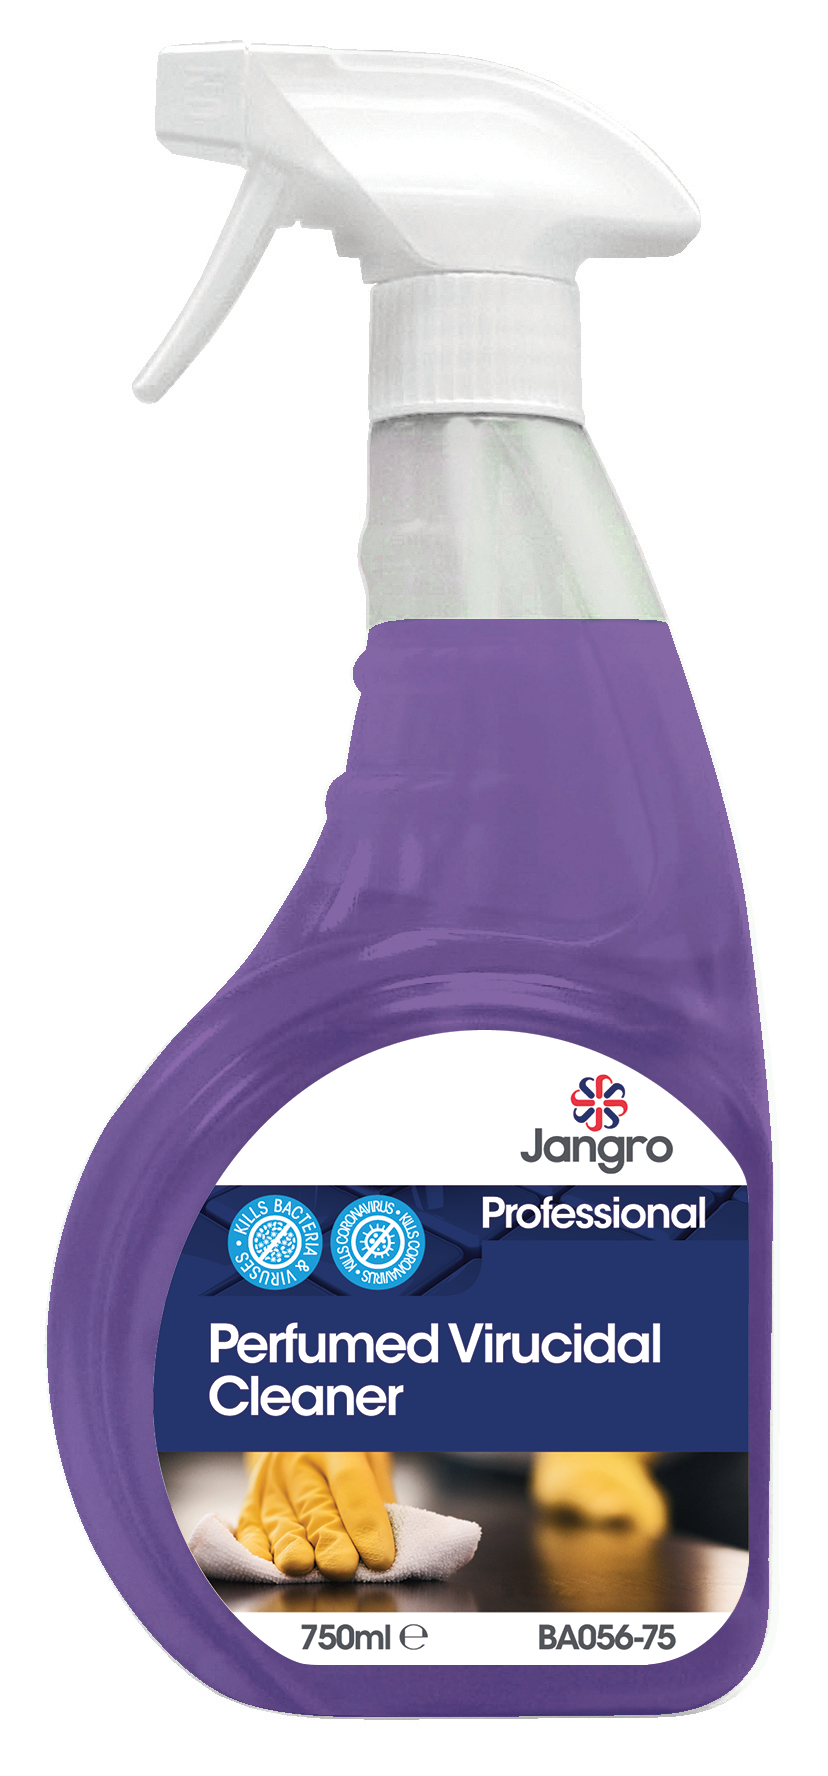 Jangro Professional Perfumed Virucidal Cleaner, 750ml